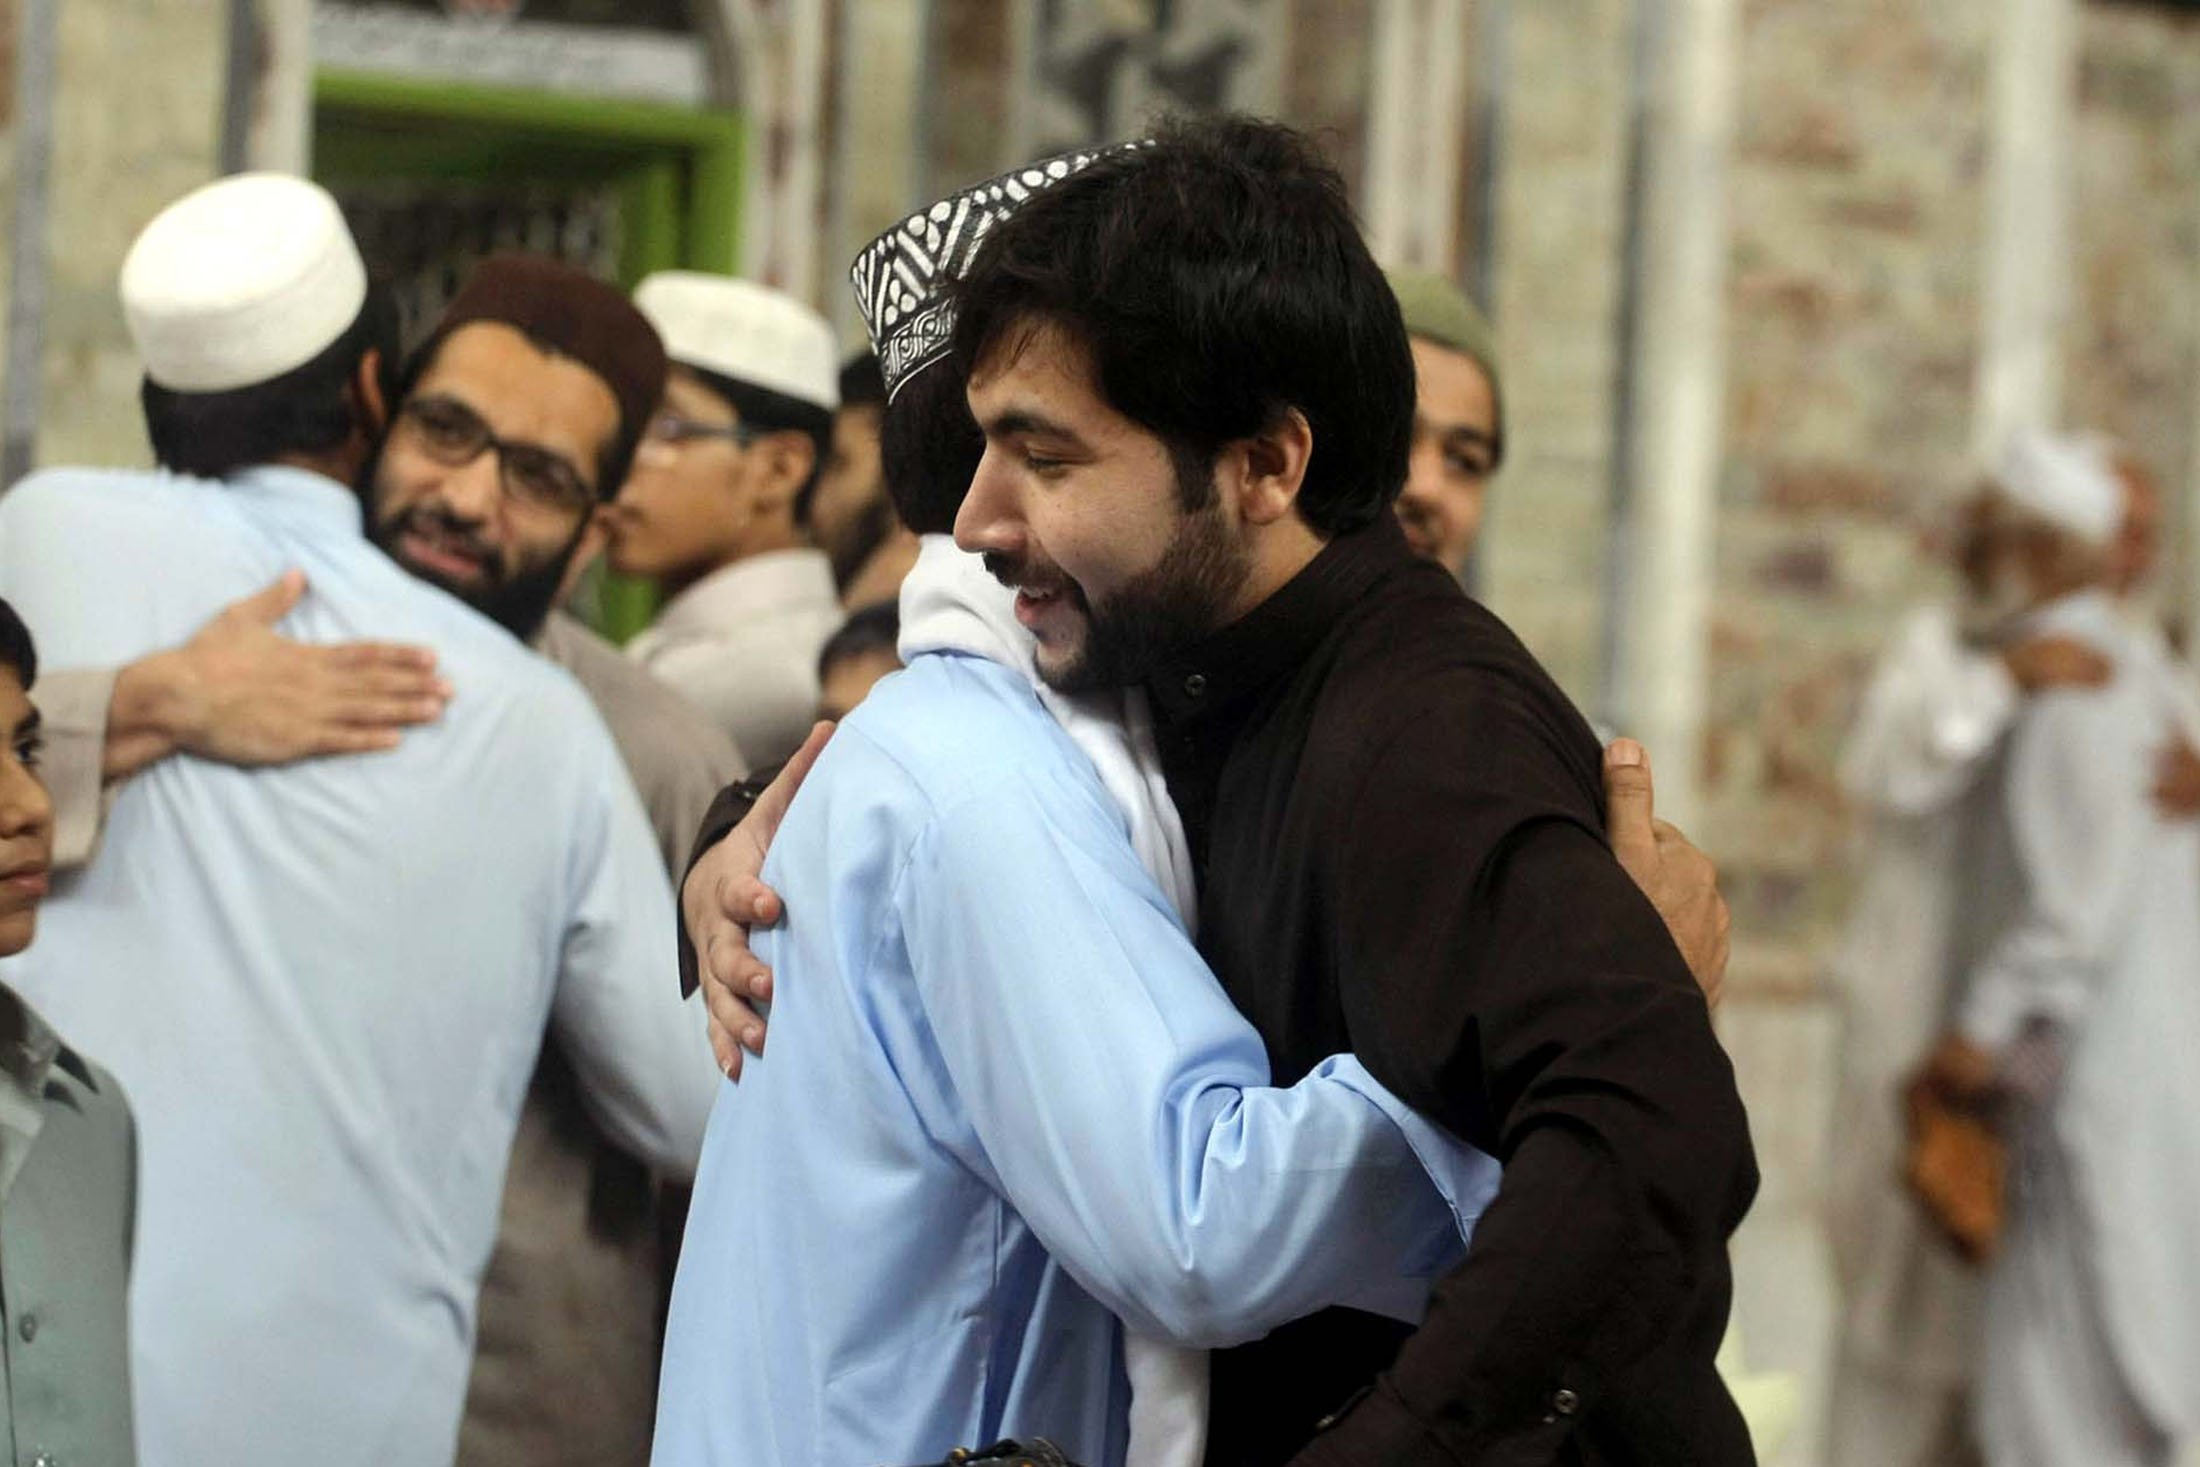 Muslims hug each other after Eid al-Fitr prayers, in Peshawar, Pakistan, July 28, 2014. (Shutterstock Photo)